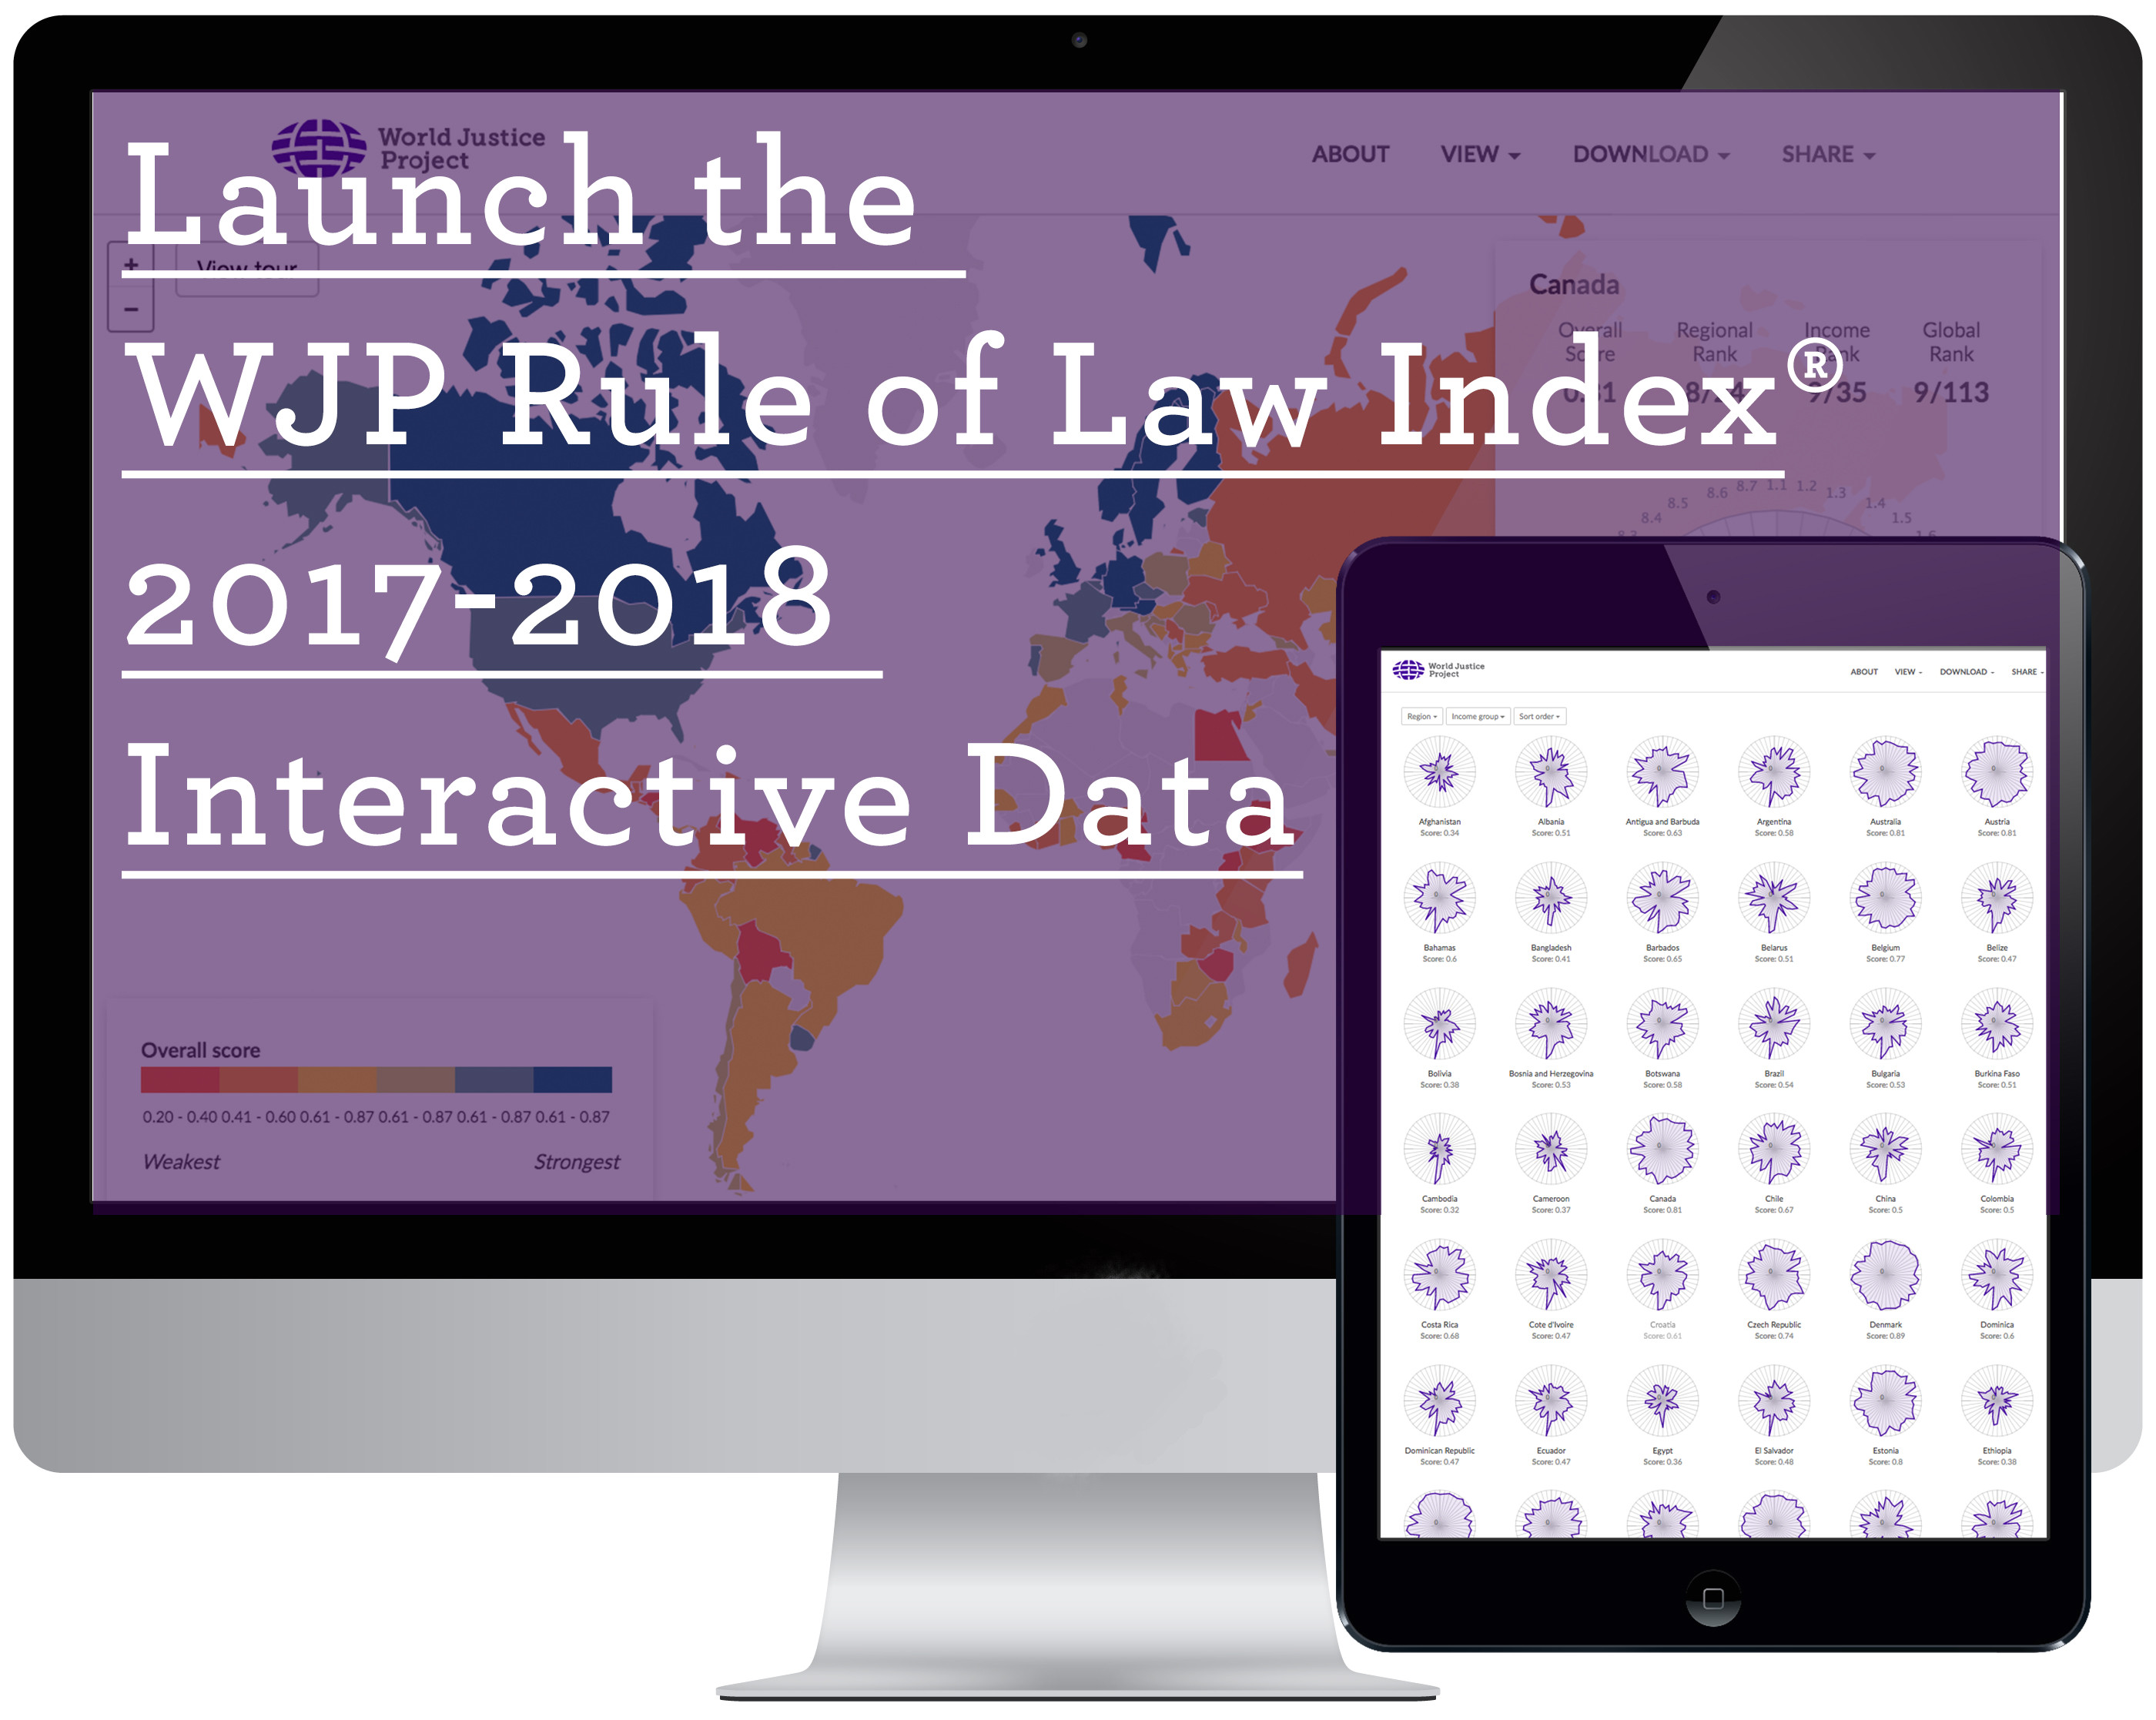 download report pdf or explore the interactive data